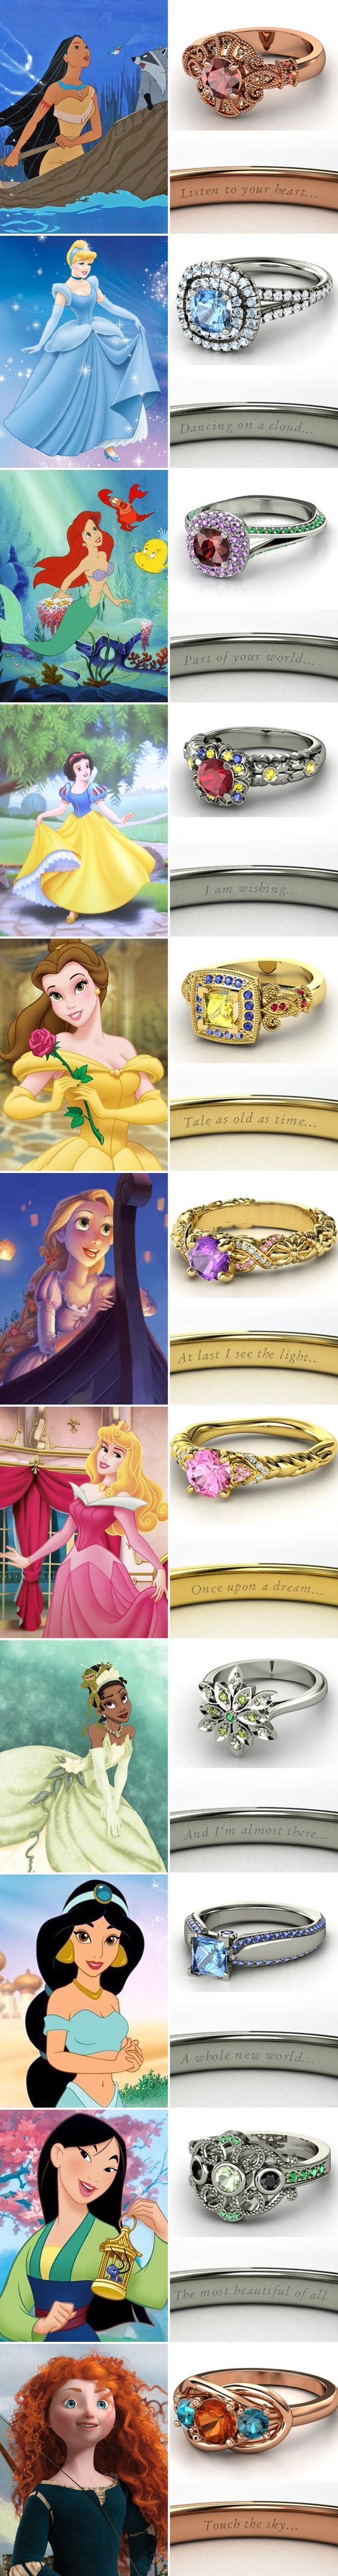 Disney princess wedding rings and more ideas for diehard #DisneyPrincess fans!